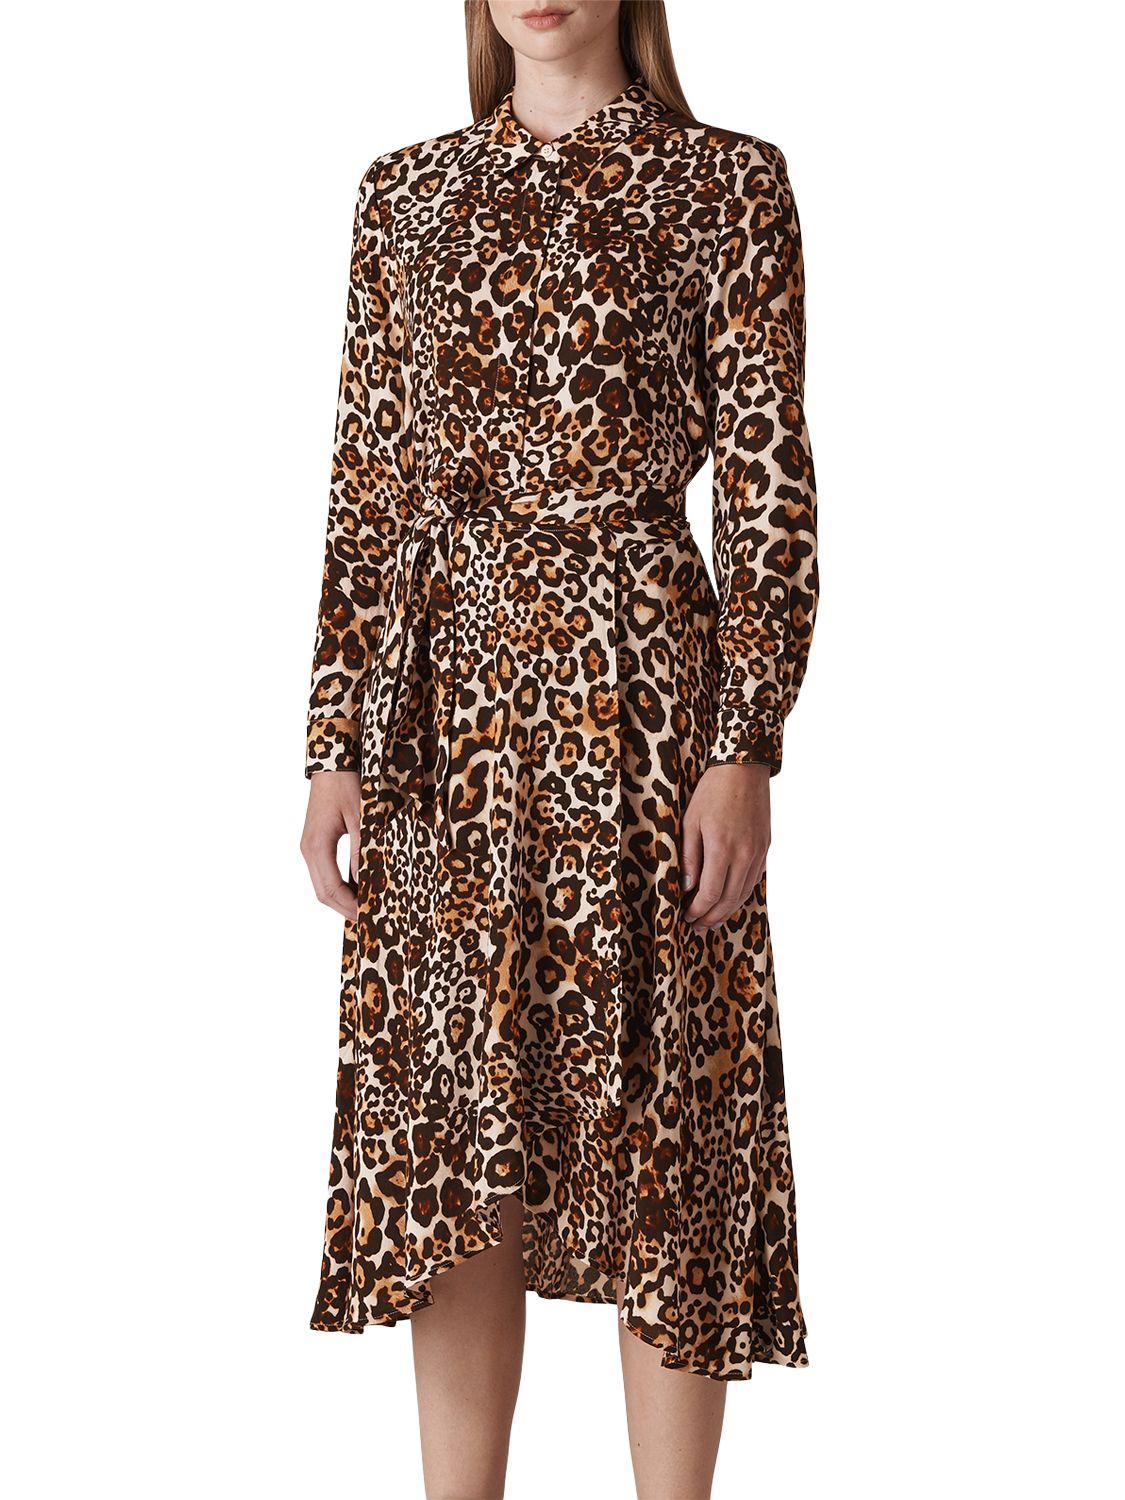 whistles leopard print dress